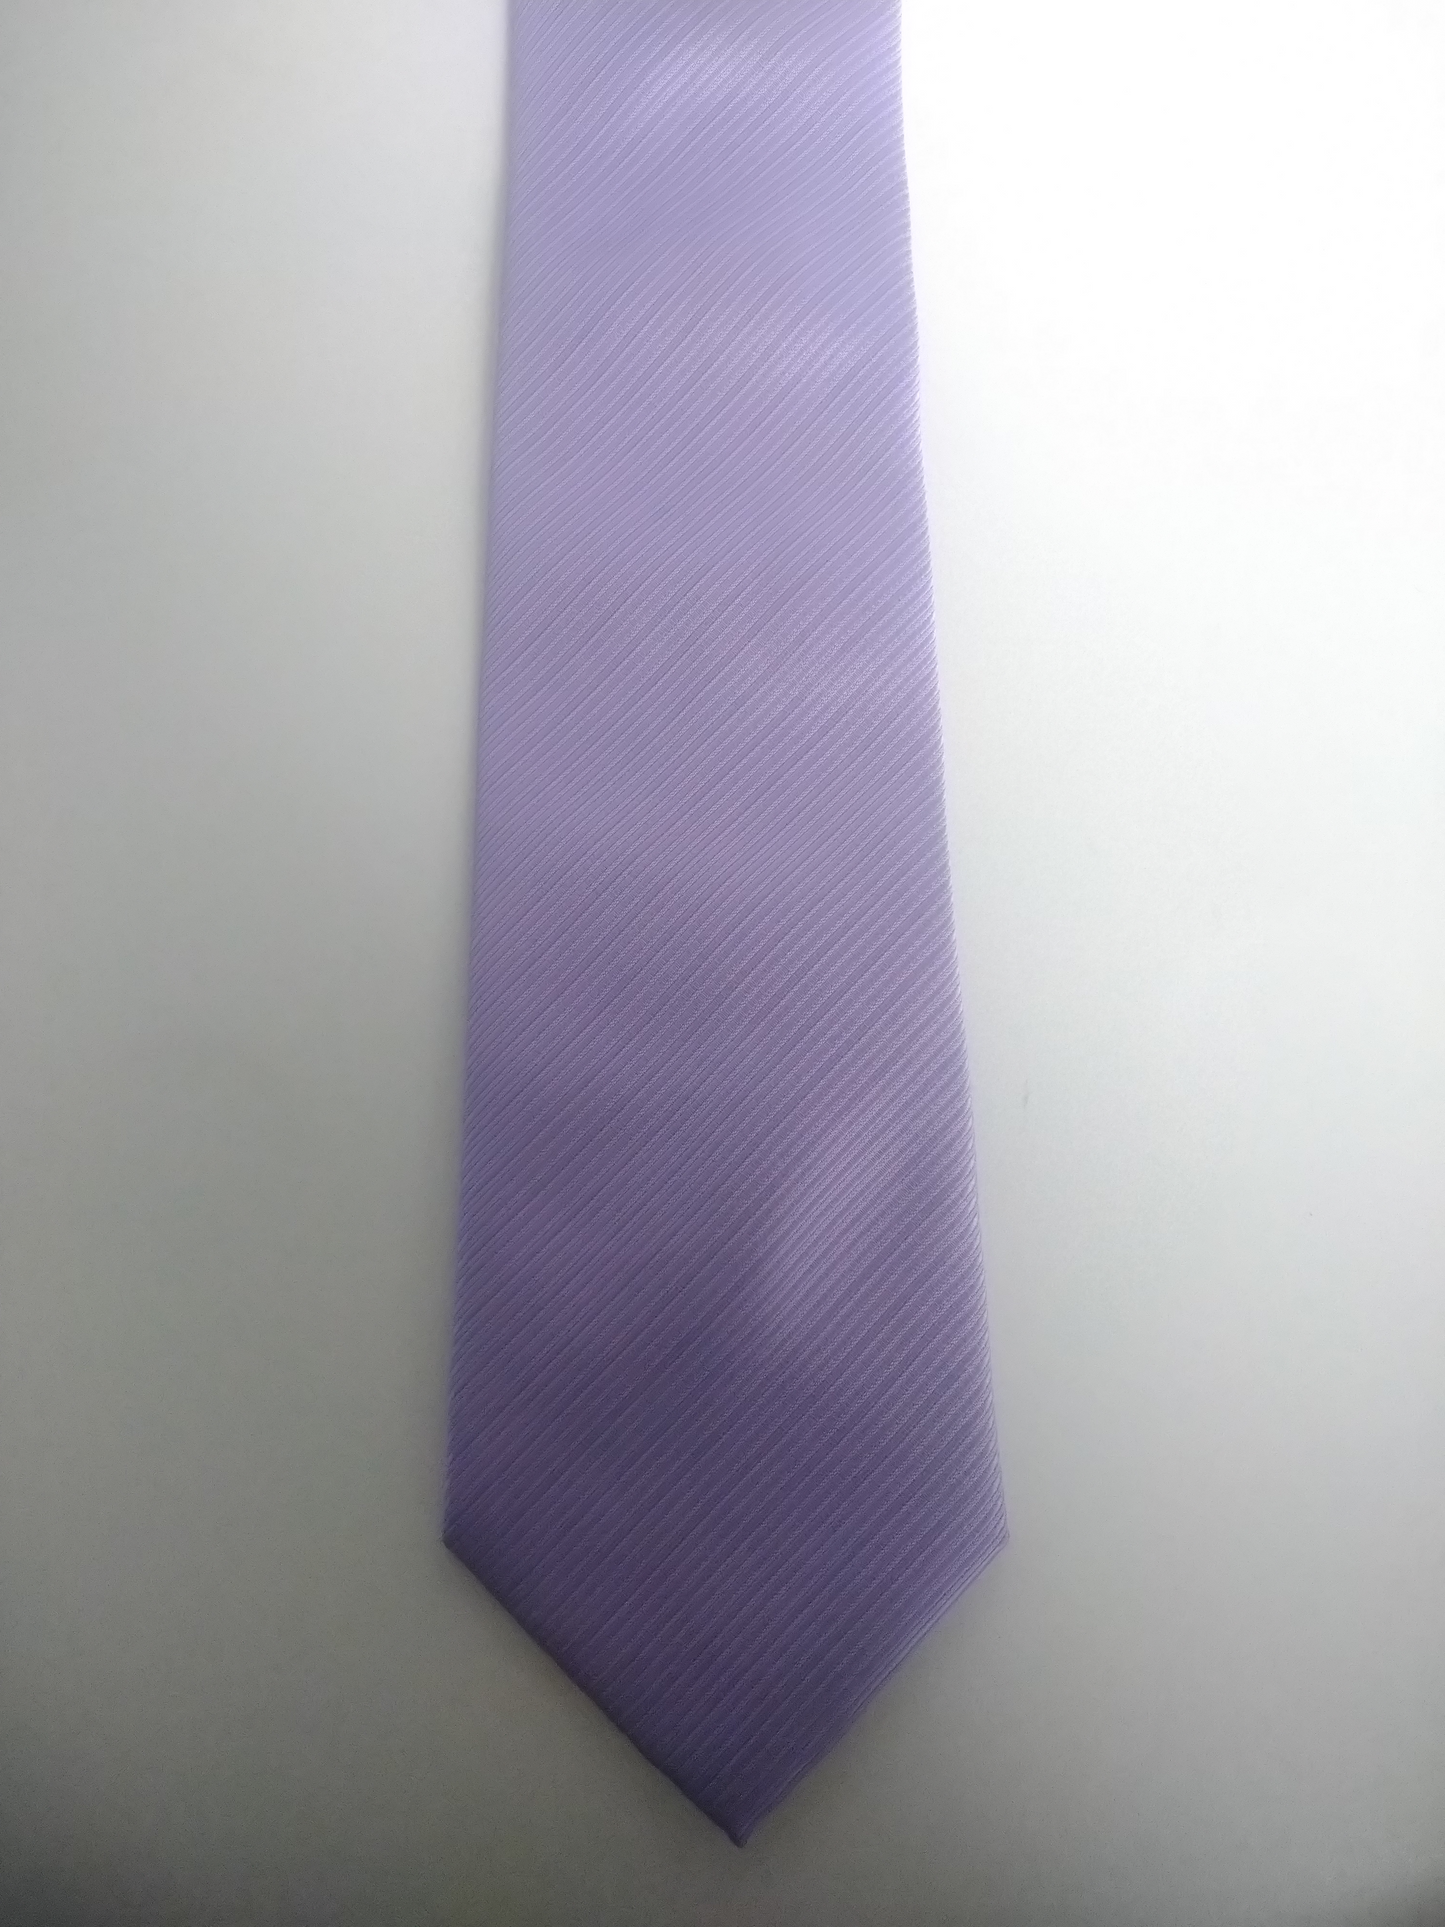 Vintage Canda Tie. Rayado púrpura. Poliéster.